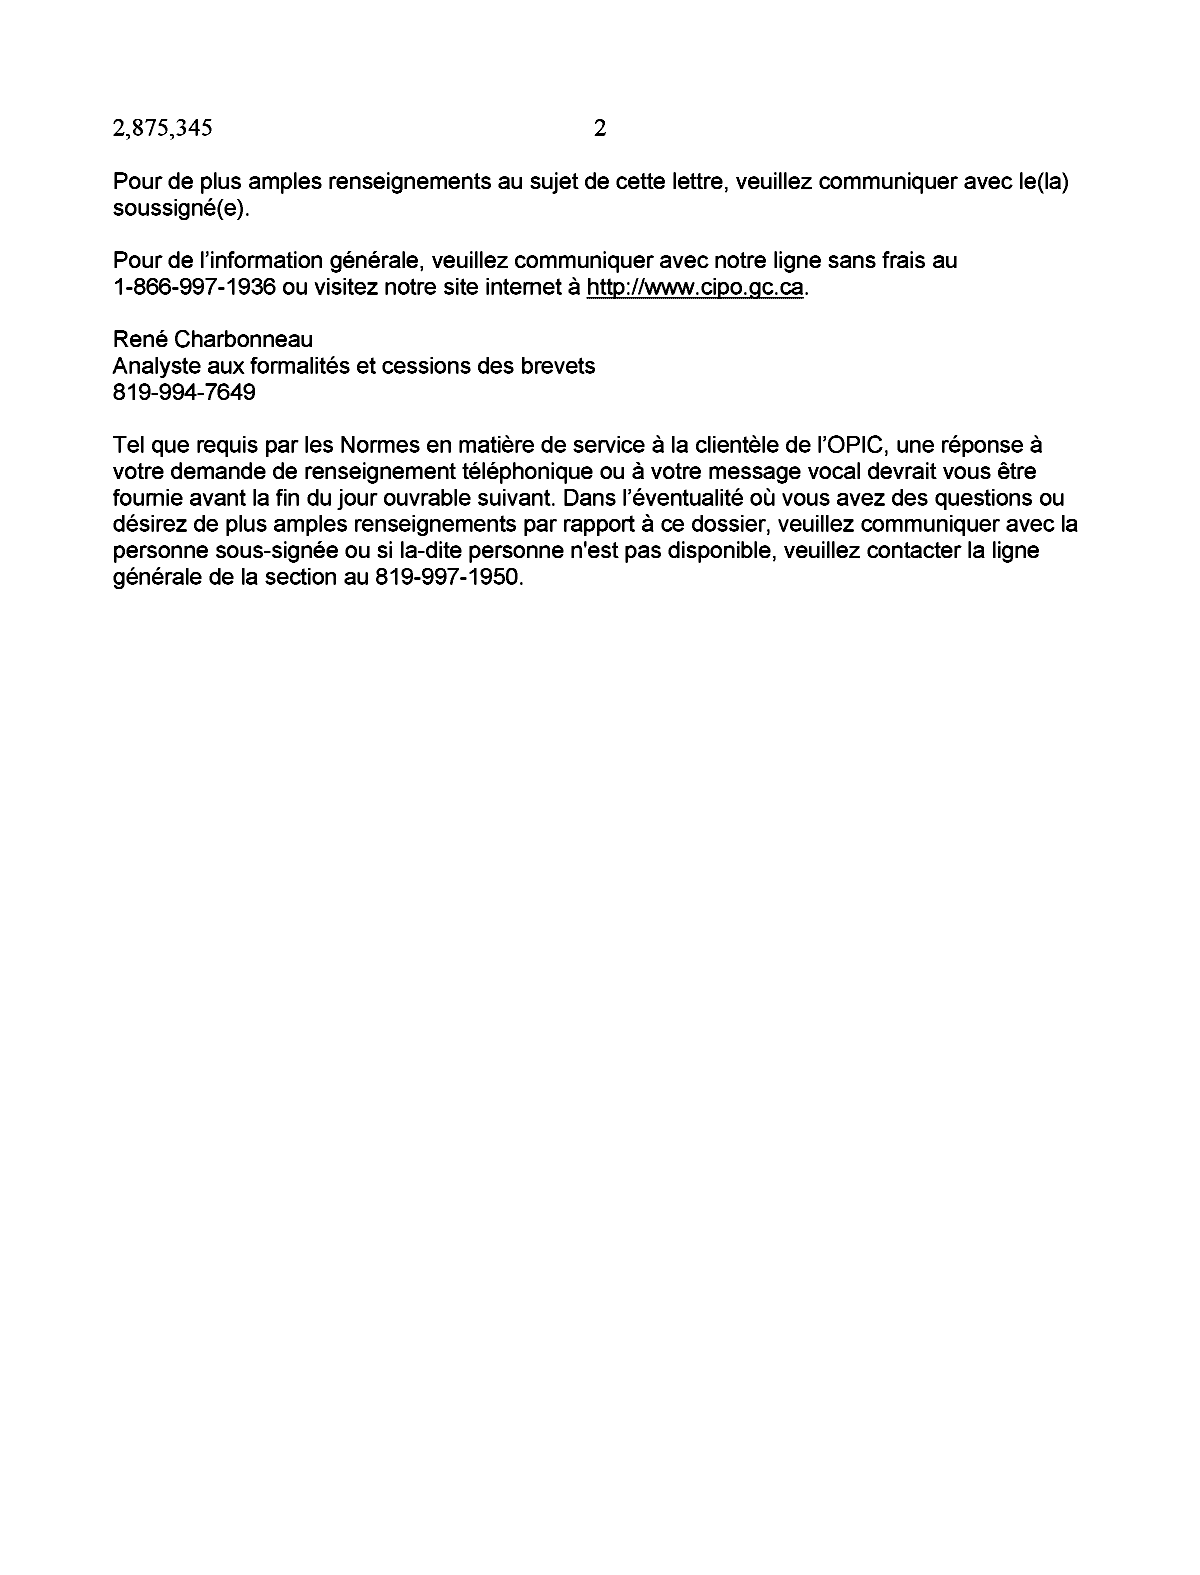 Canadian Patent Document 2875345. Correspondence 20141222. Image 2 of 2